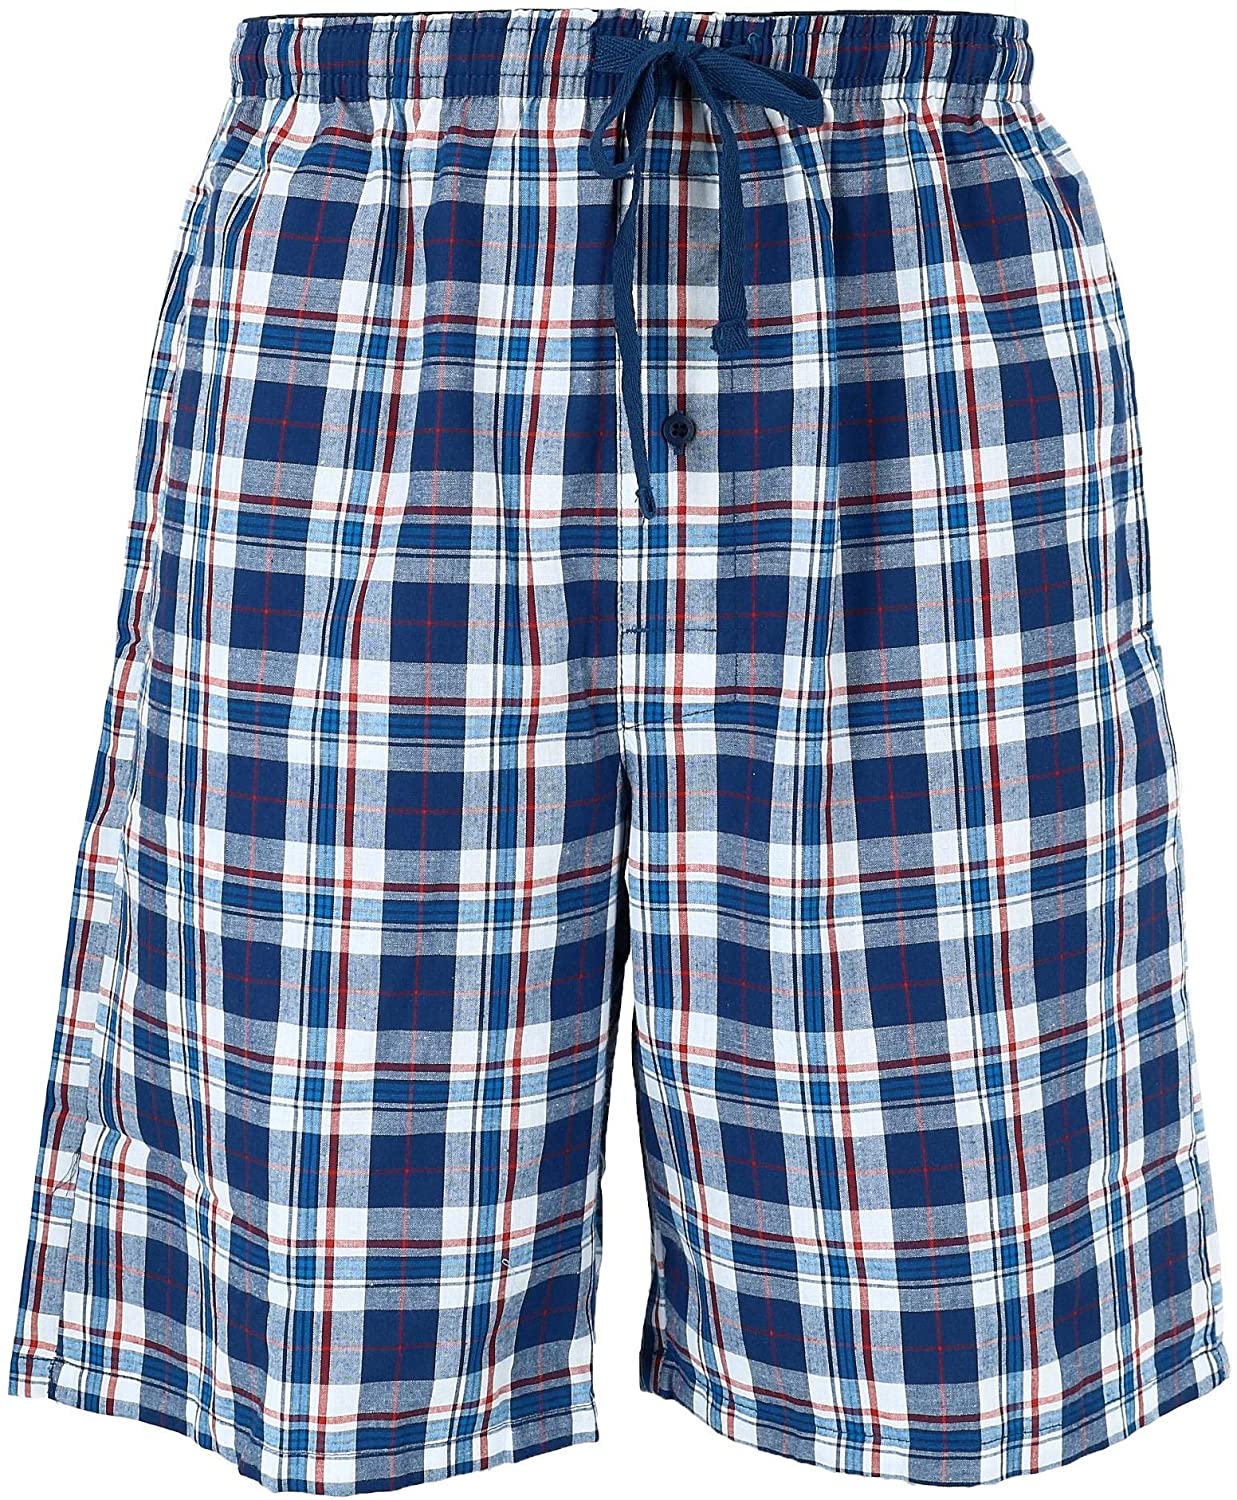 New Hanes Men's Big and Tall Madras Sleep Pajama Shorts 